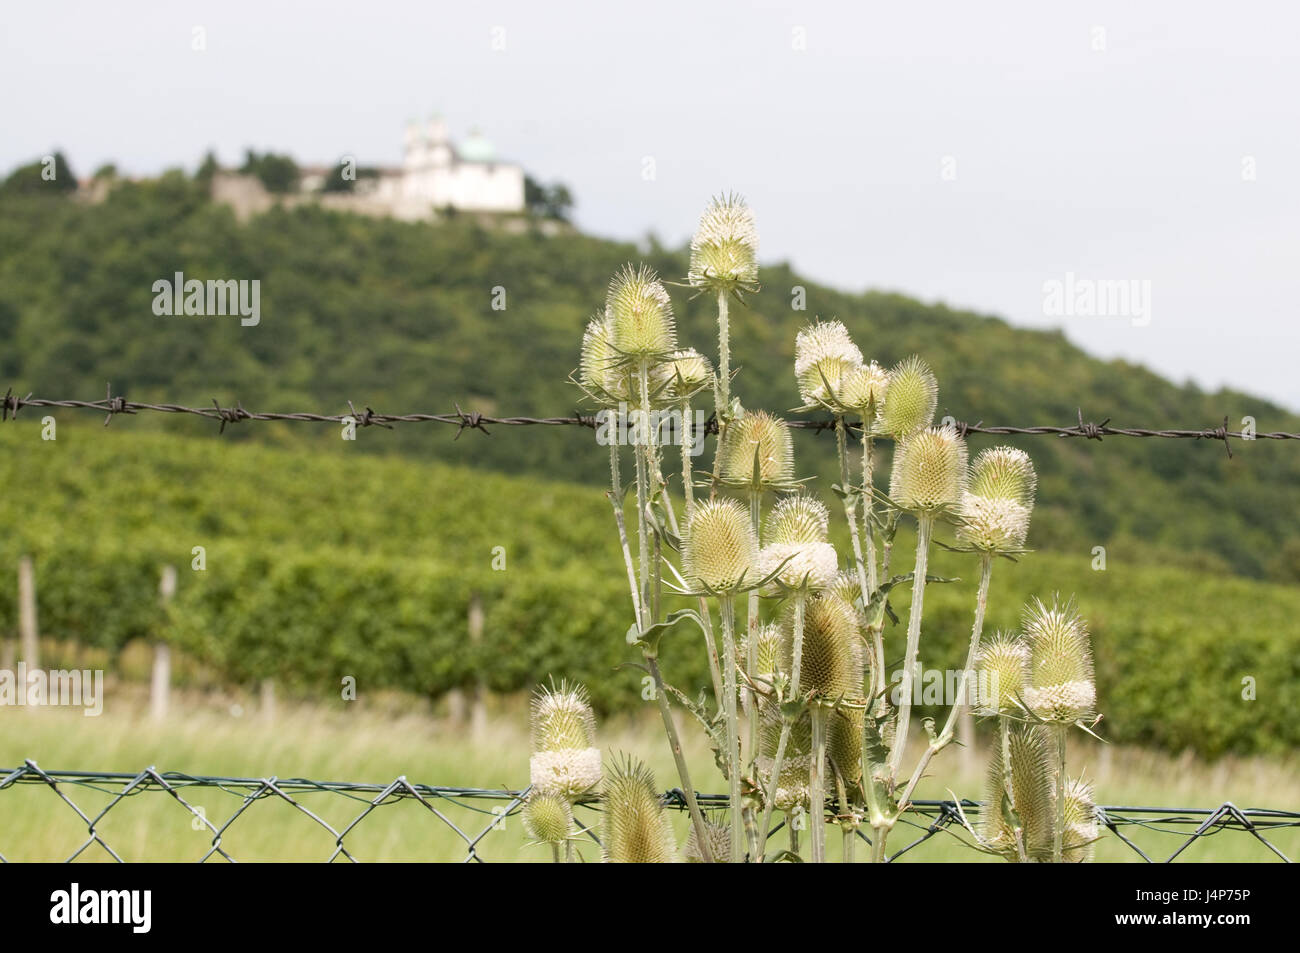 Austria, Vienna, vineyard, fence, teasels, detail, blur, Stock Photo